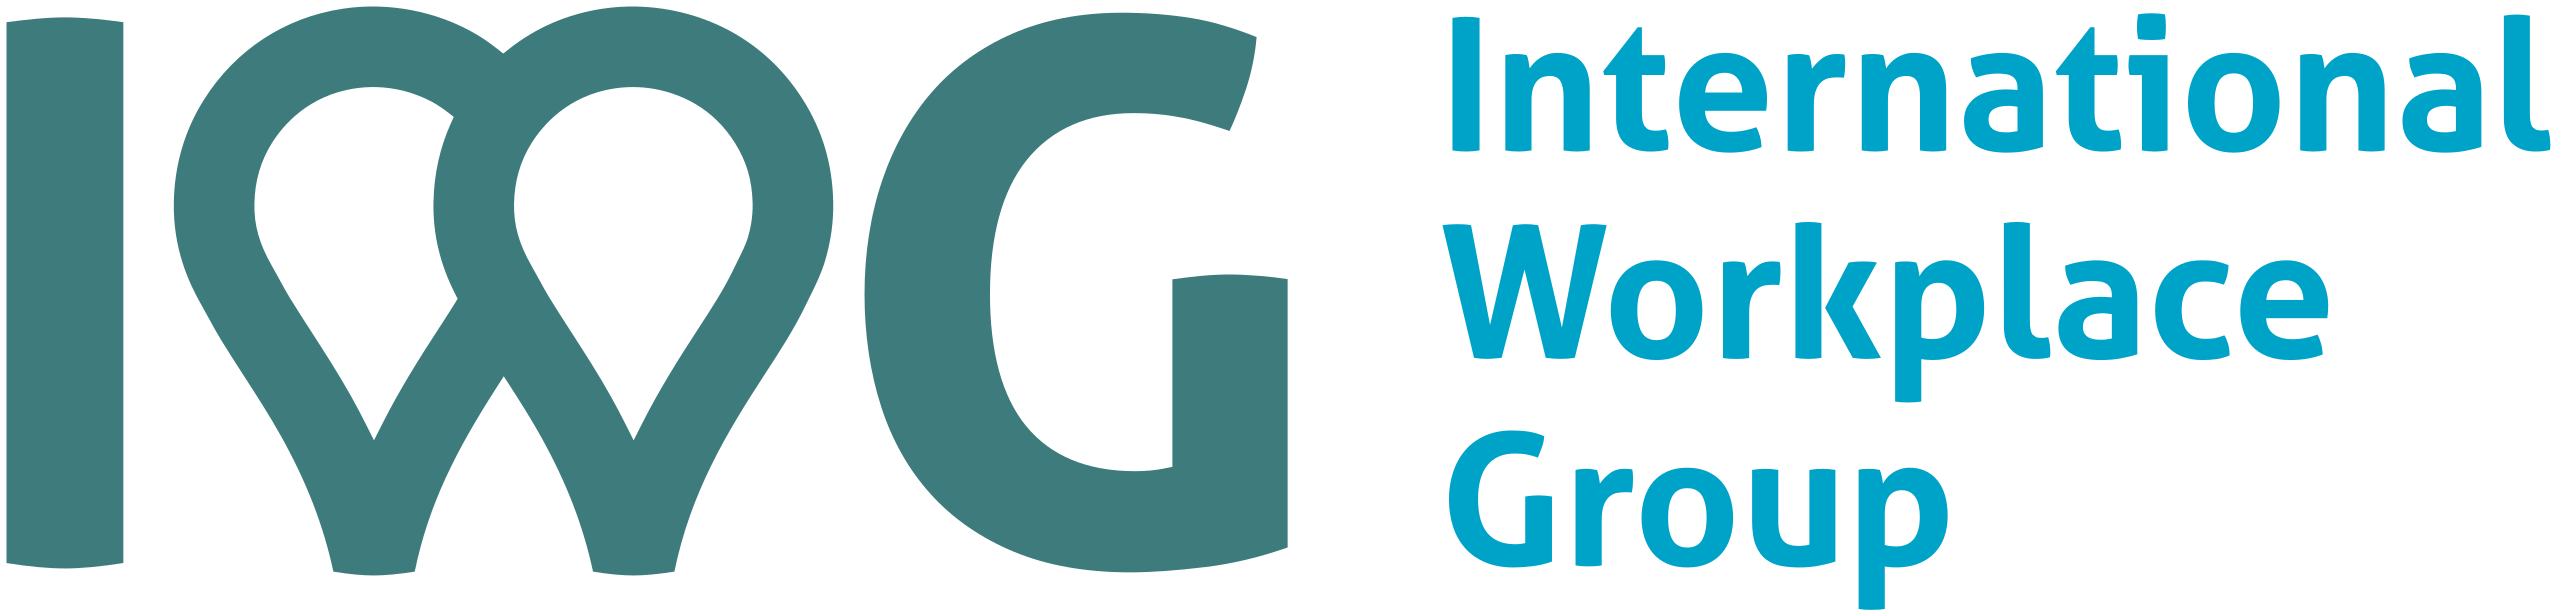 IWG_logo.svg